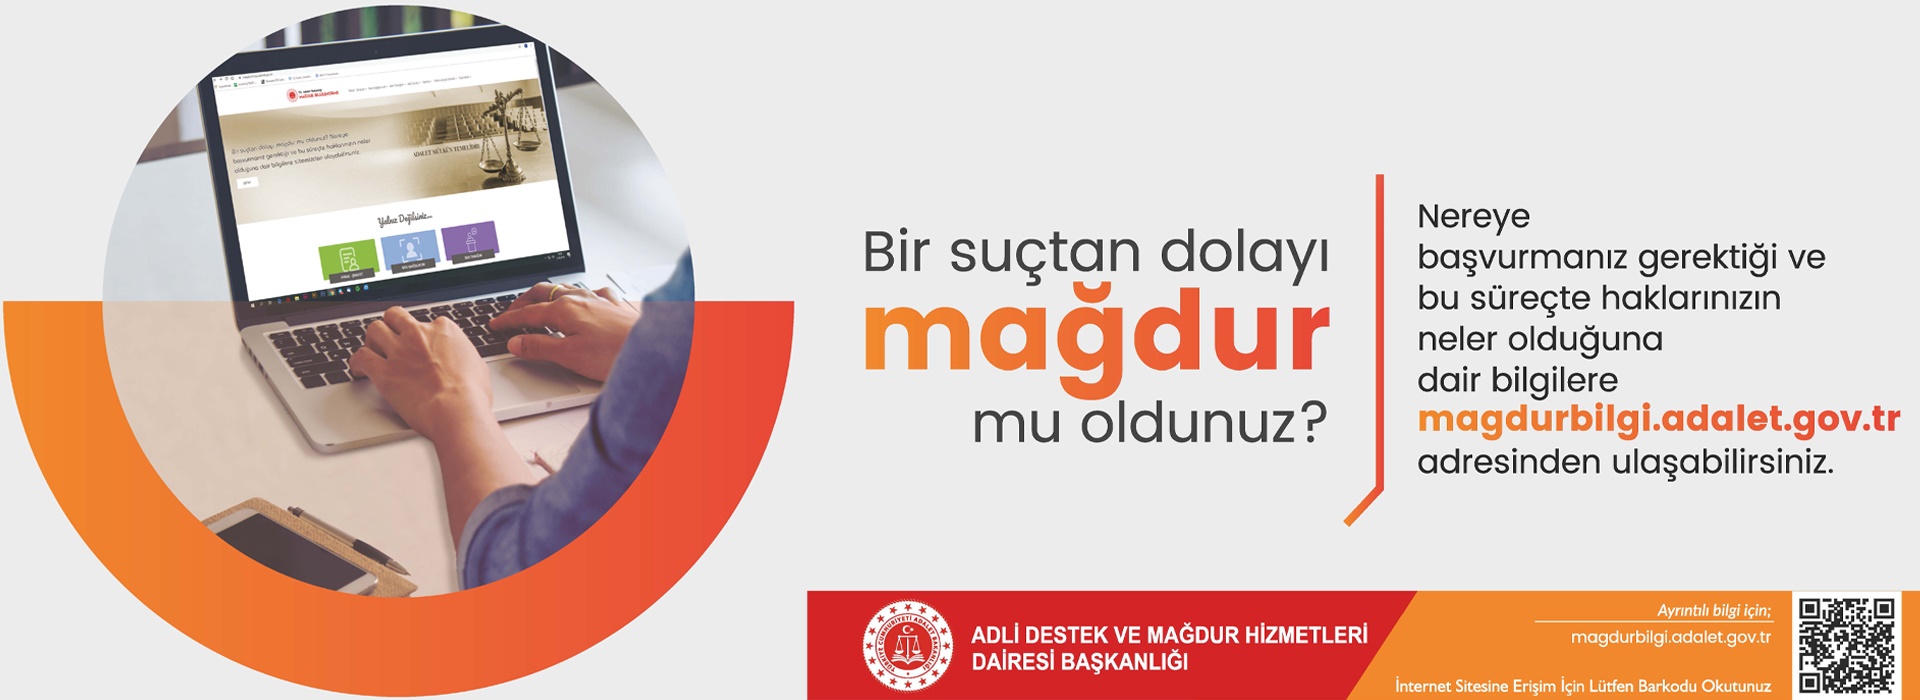  "www.magdurbilgi.adalet.gov.tr"